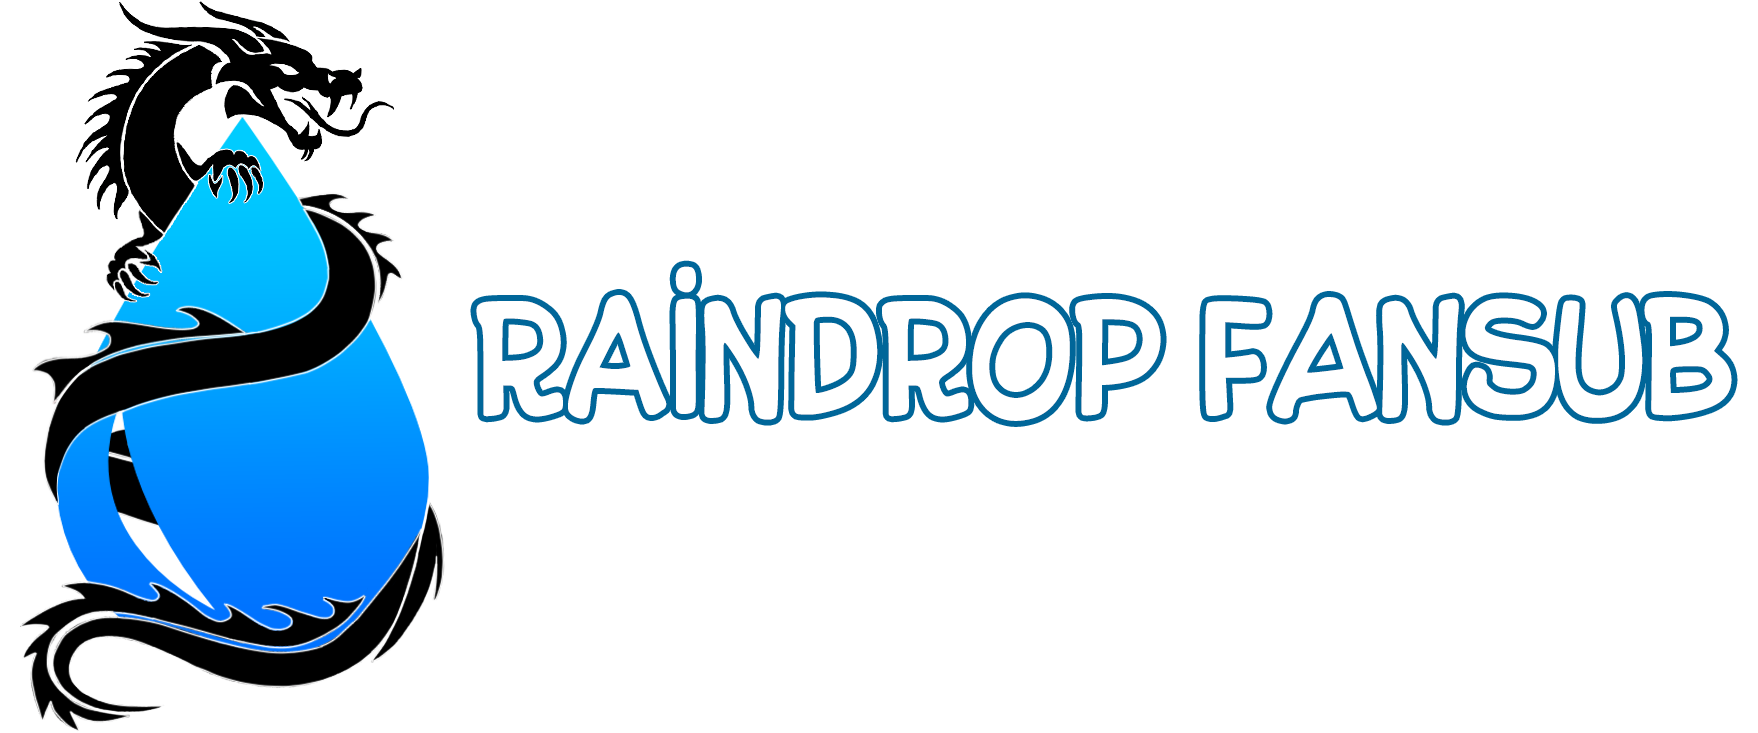 Raindrop Fansub - Manga manhua WEbtoon herşey bulabilirsiniz.